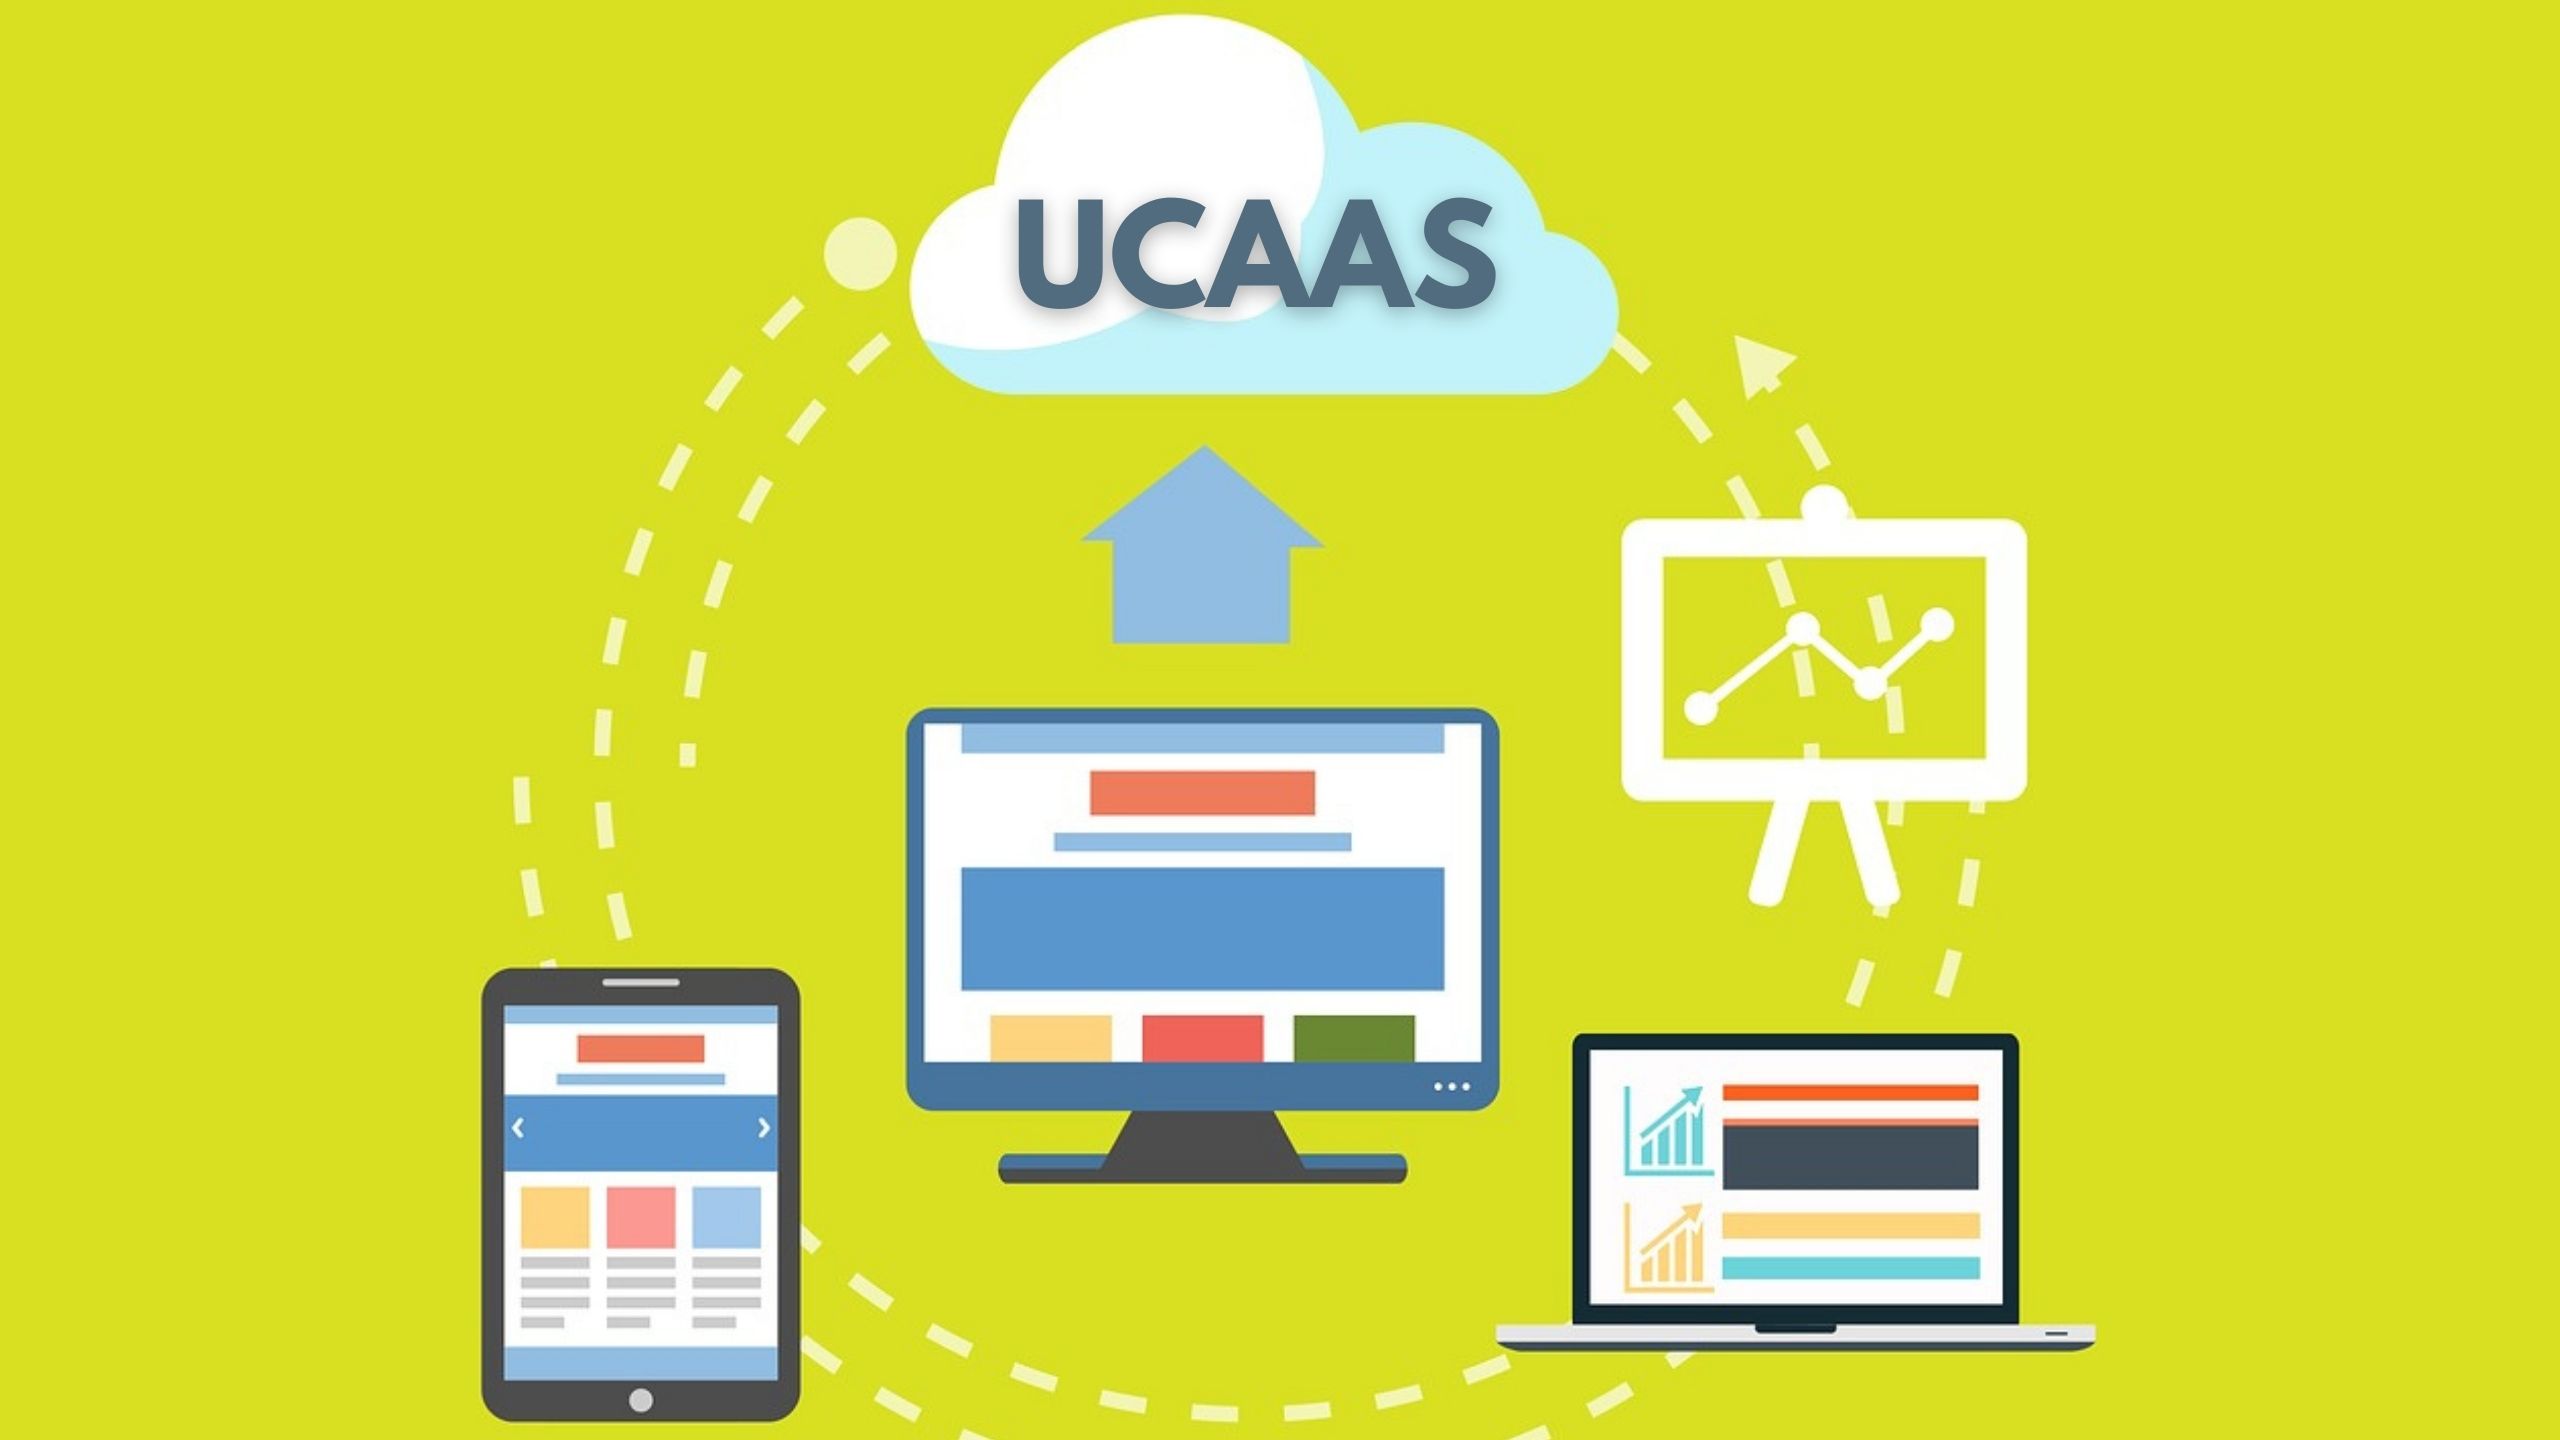 UCAAS unified communications